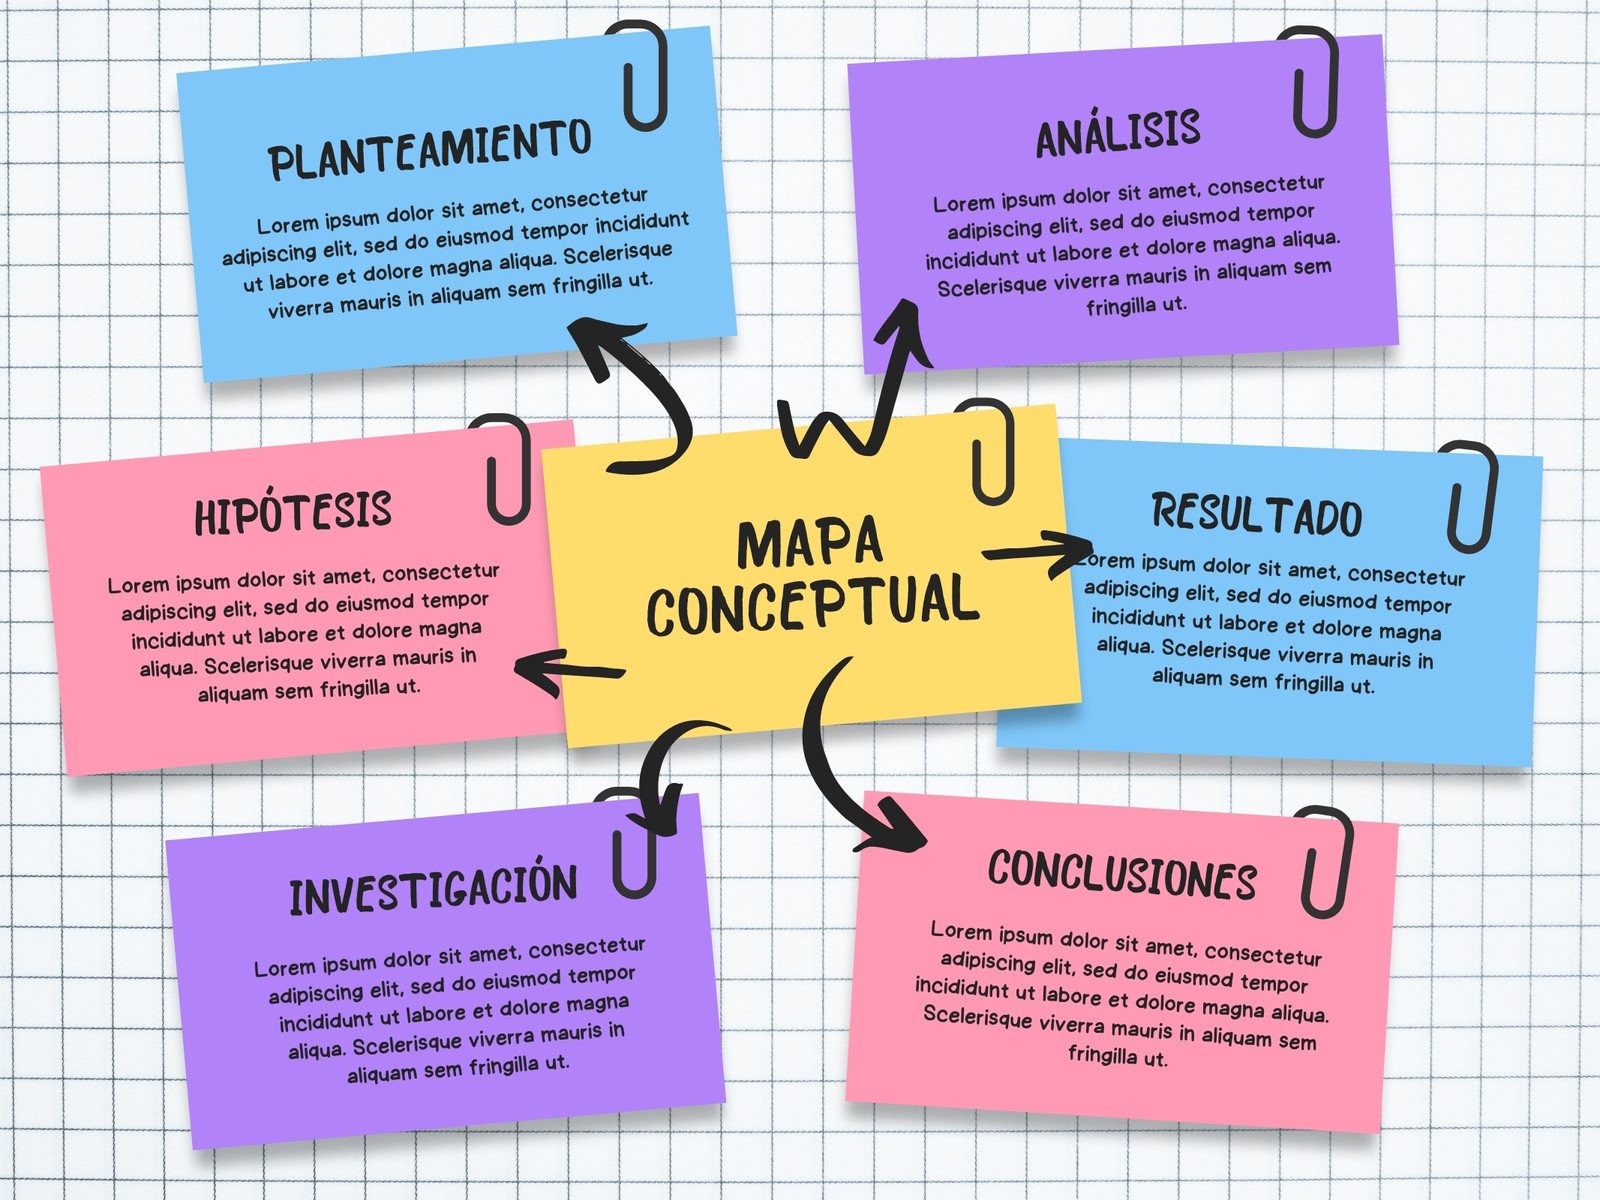 Mapa conceptual proyecto ilustrado colorido